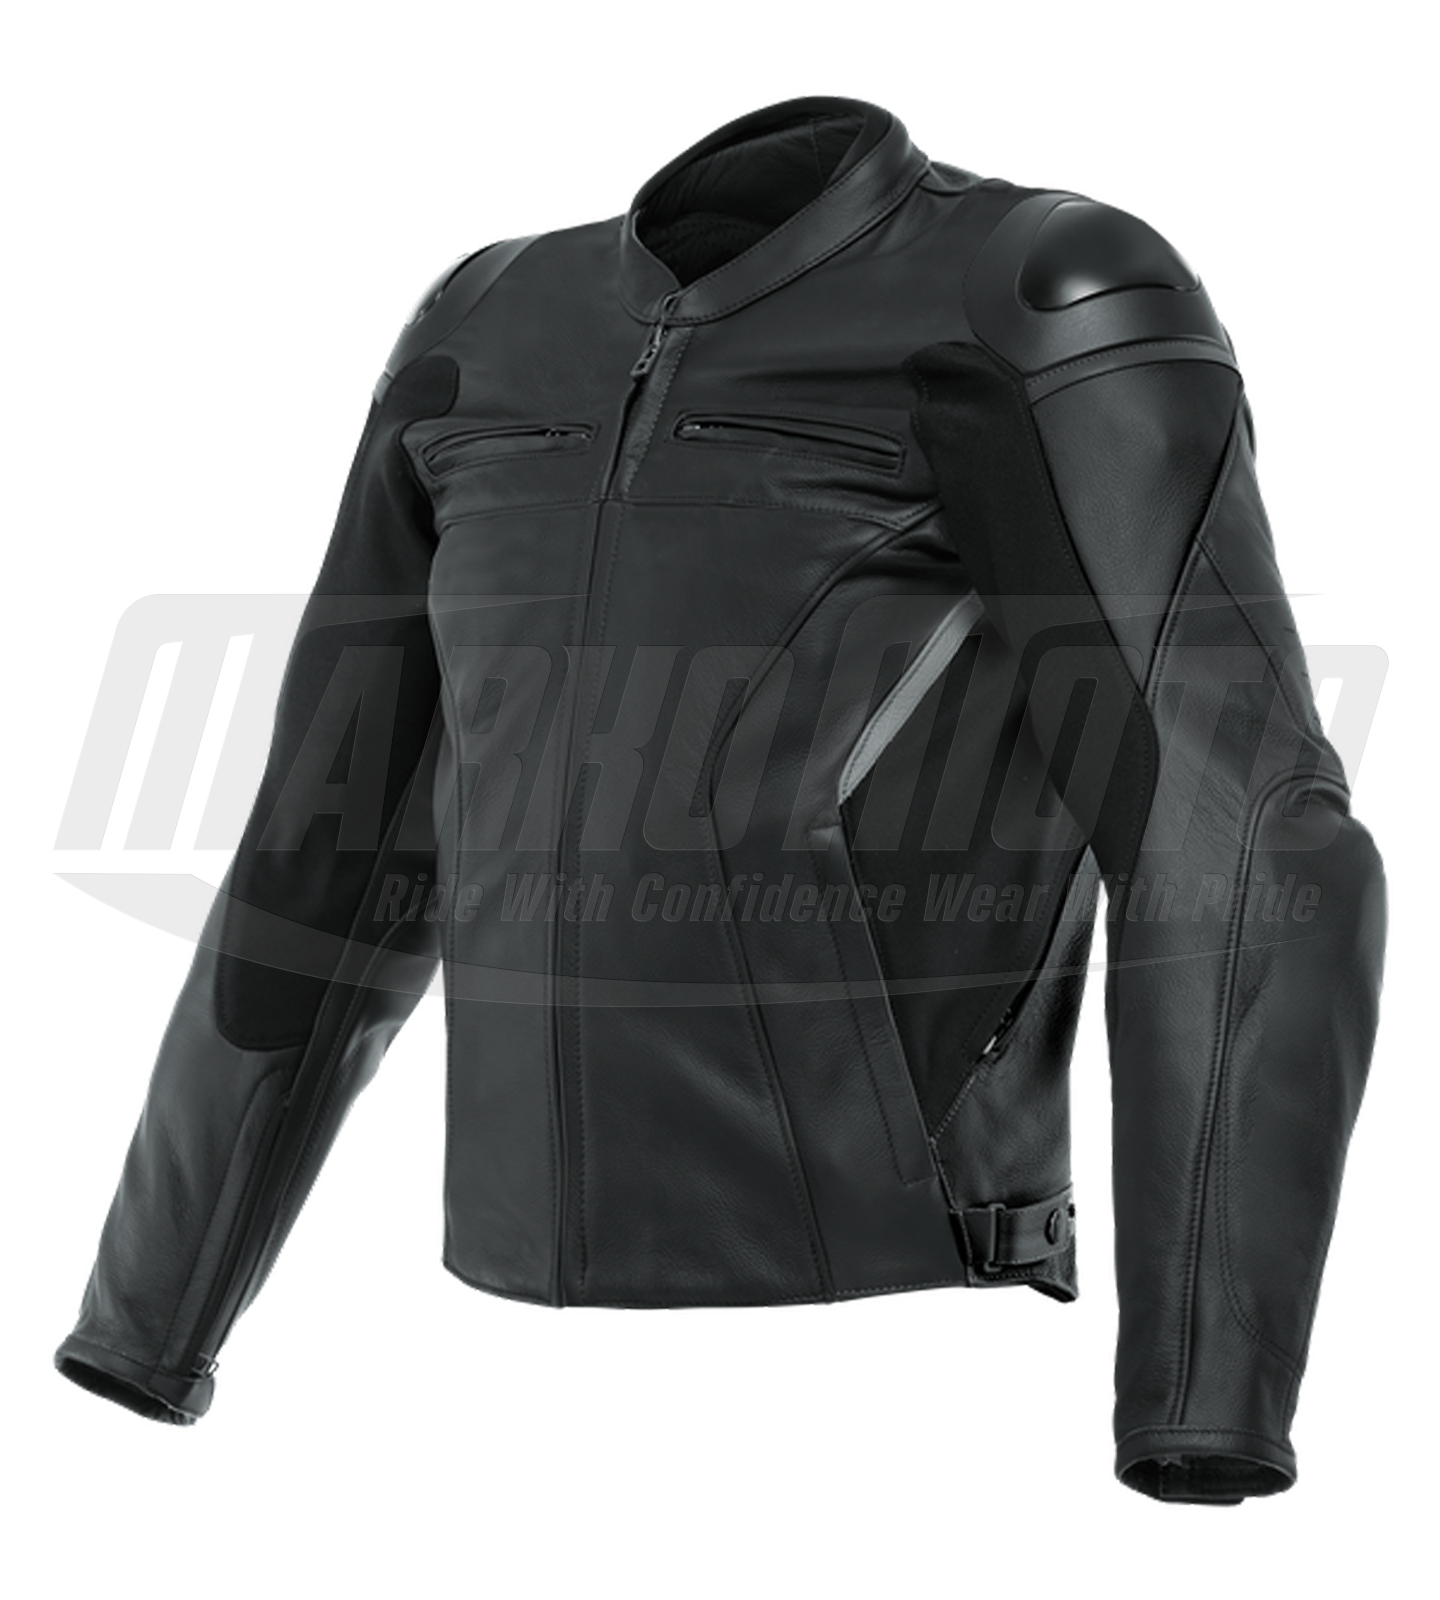 Black and Grey Motorcycle Racing Genuine Leather Jacket